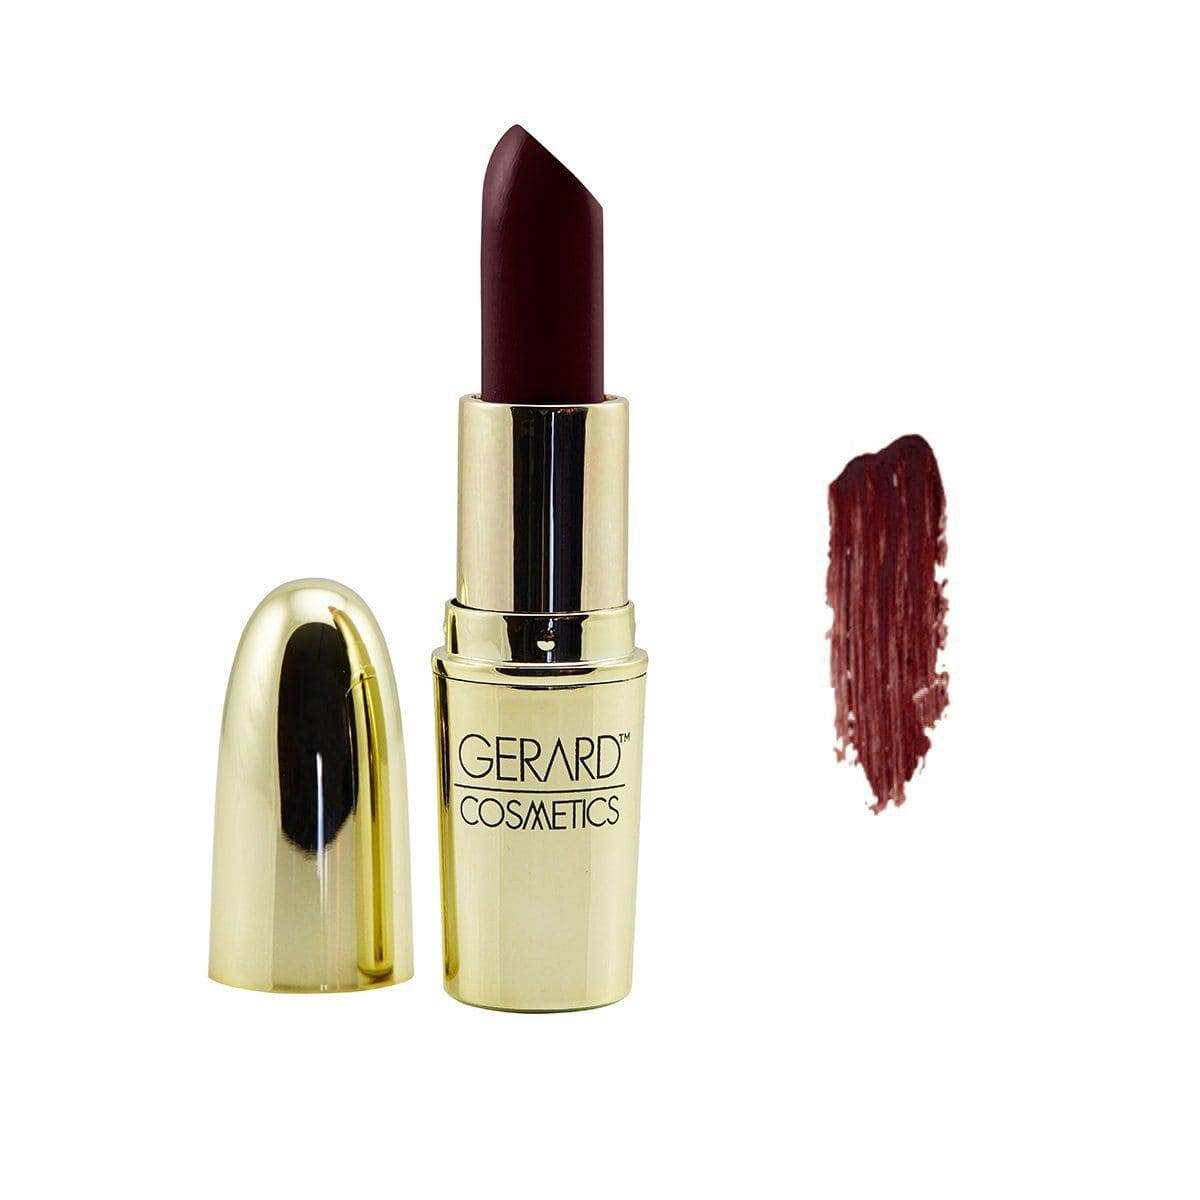 Gerard Cosmetics Lipstick - Cherry Cordial 4g, lipstick, London Loves Beauty